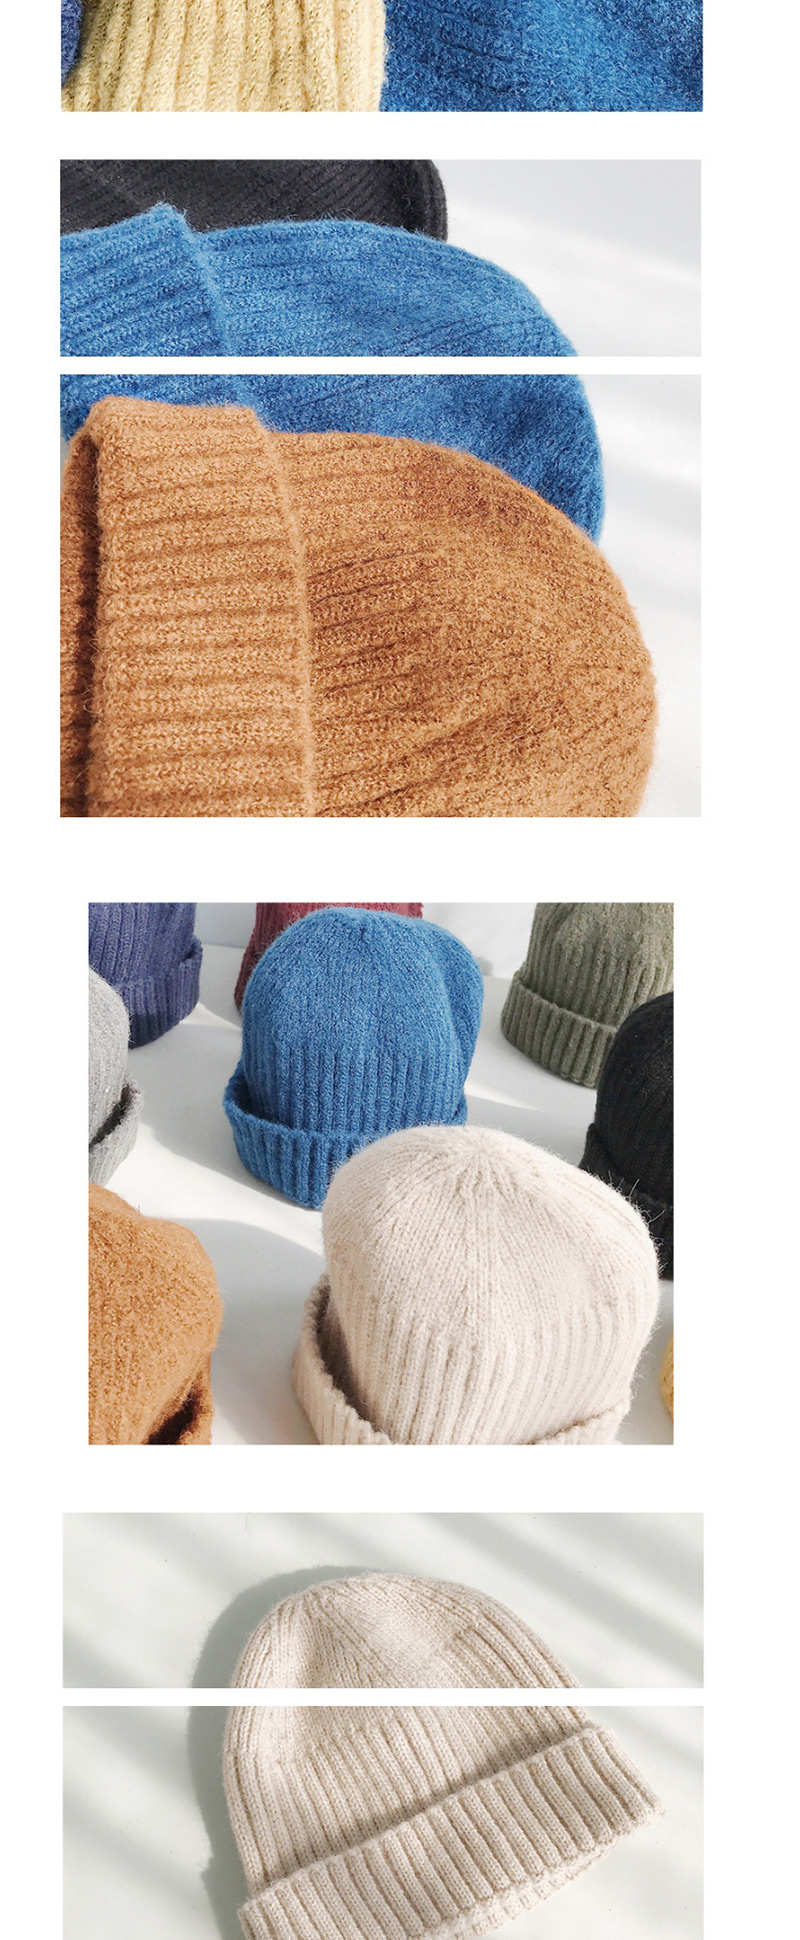 Fashion Short Mohair Beige Knitted Wool Cap,Knitting Wool Hats